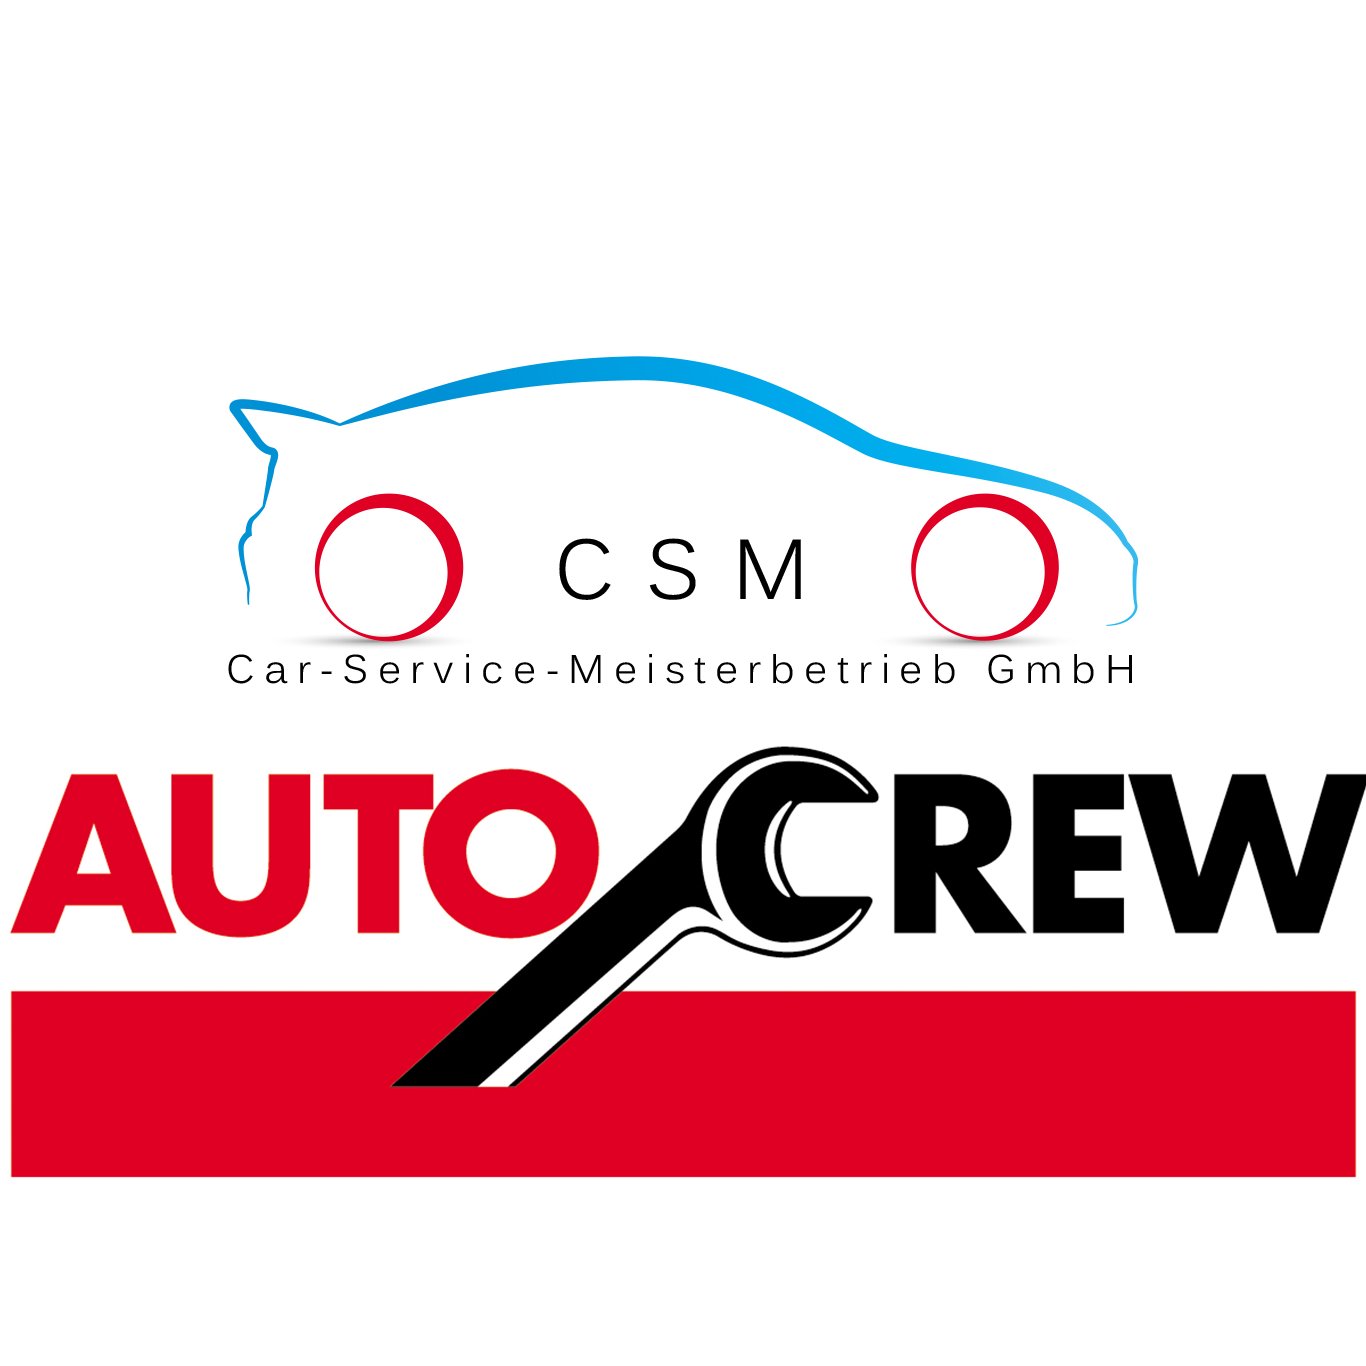 AutoCrew - CSM Car-Service-Meisterbetrieb GmbH  